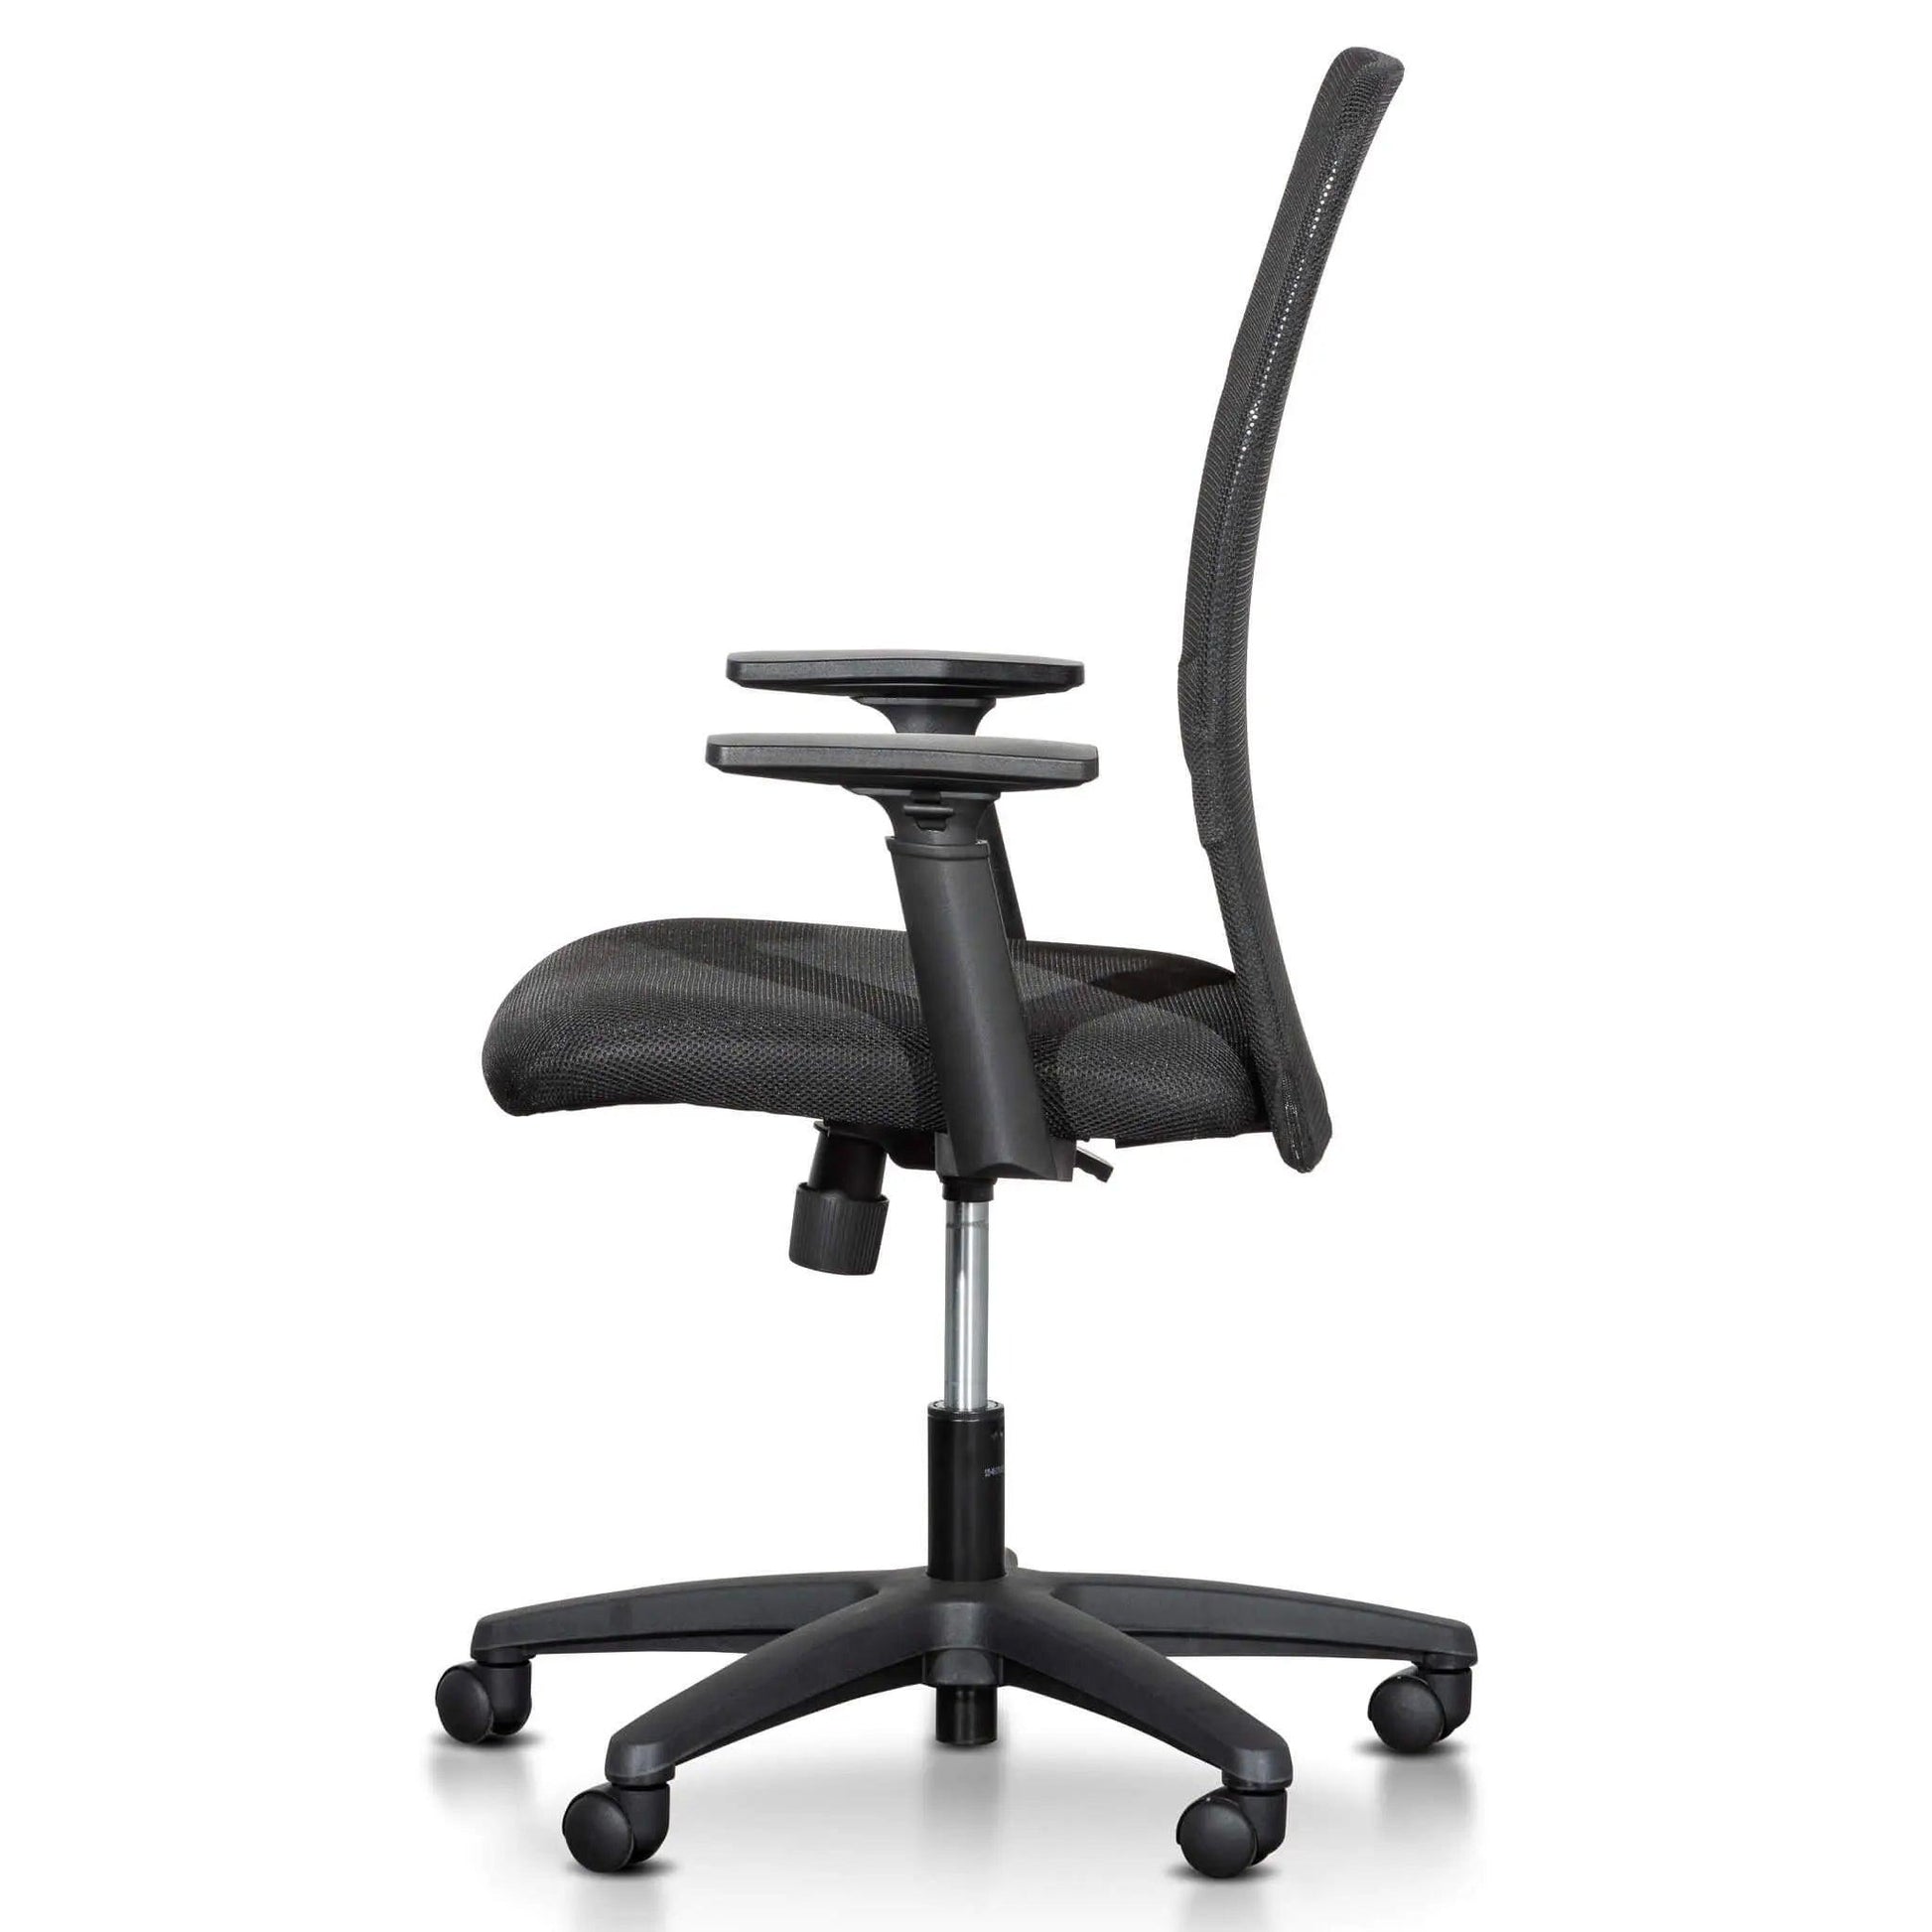 Calibre Mesh Office Chair - Black OC6240-UN - Office/Gaming ChairsOC6240-UN 3